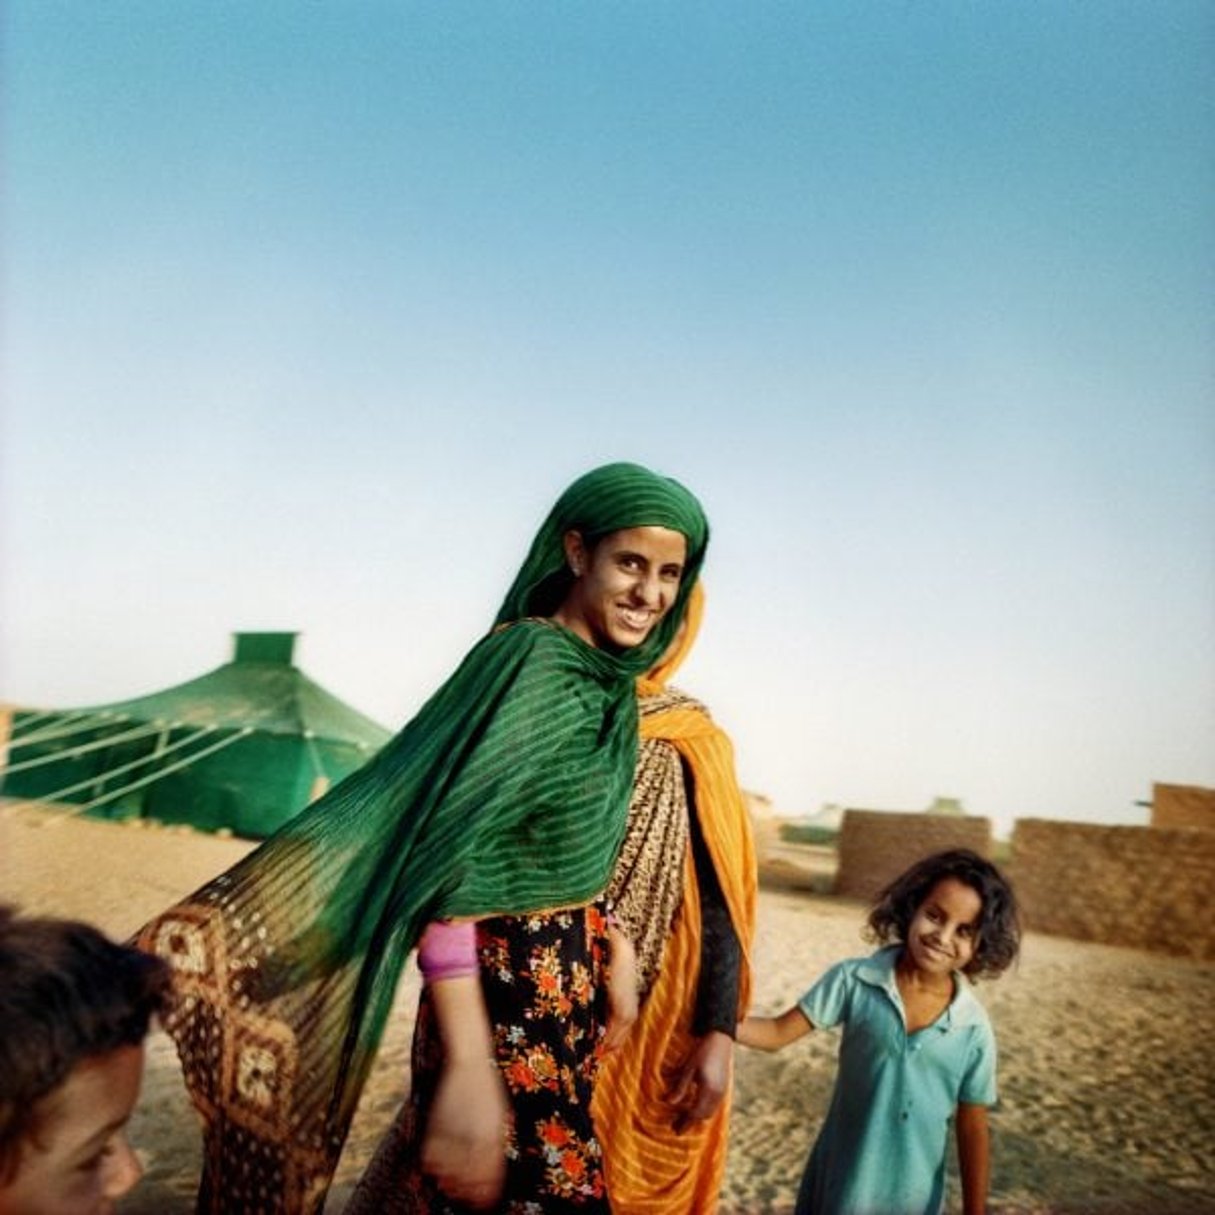 Dans un camp de réfugiés, à Tindouf. © Alfredo CALIZ/PANOS-REA